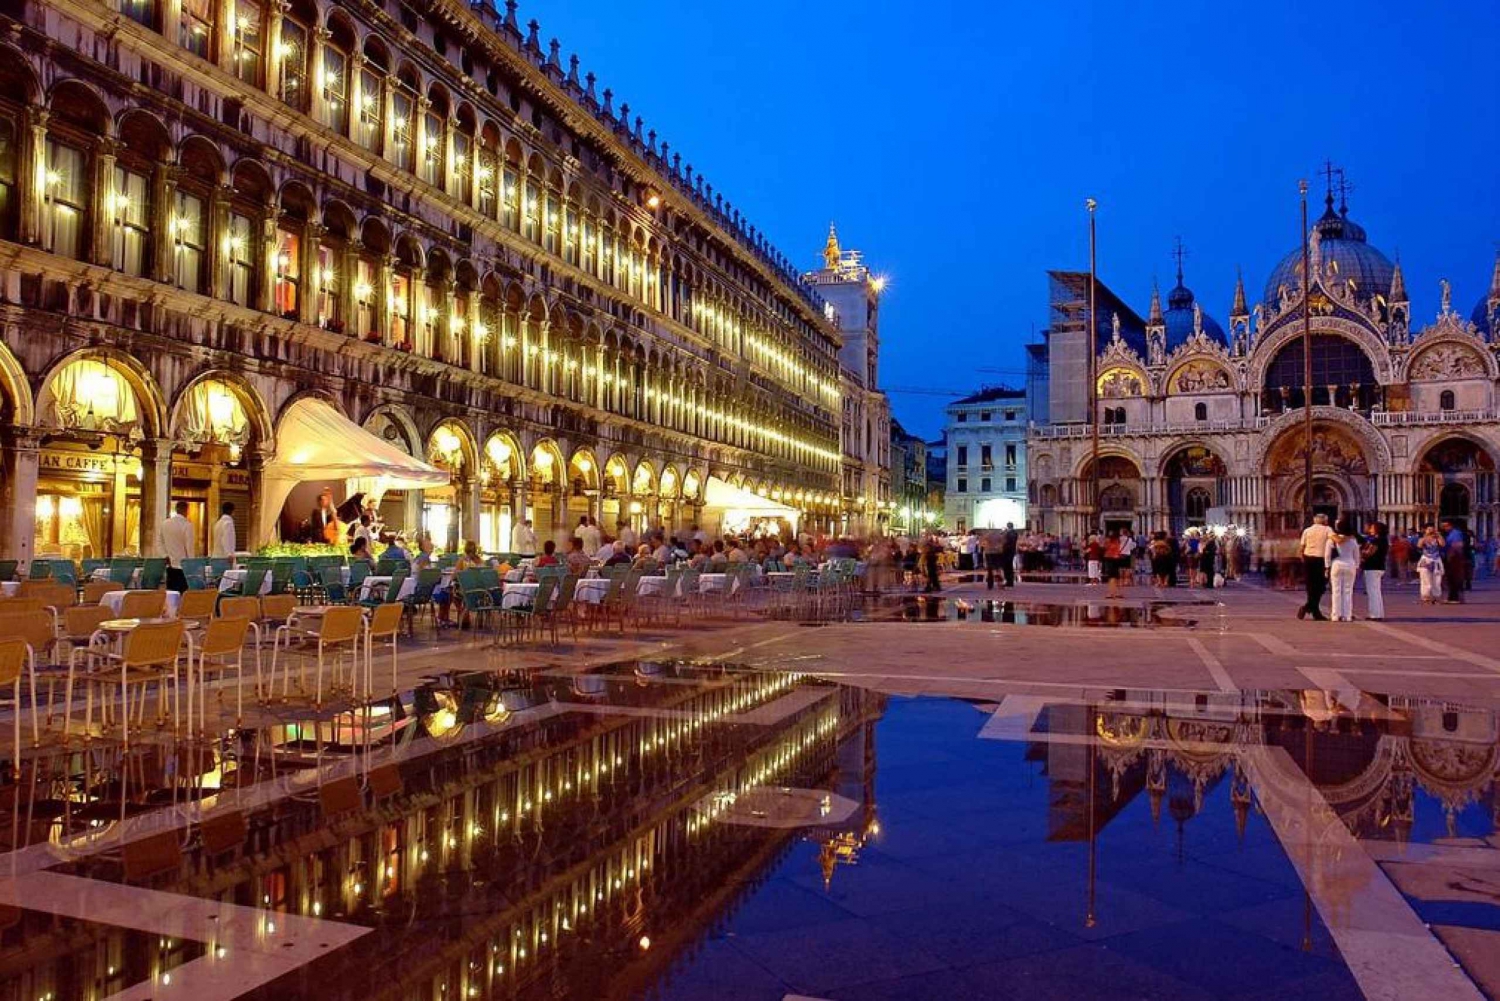 Venice: Guided Tour & Skip-the-Line St. Mark's Basilica